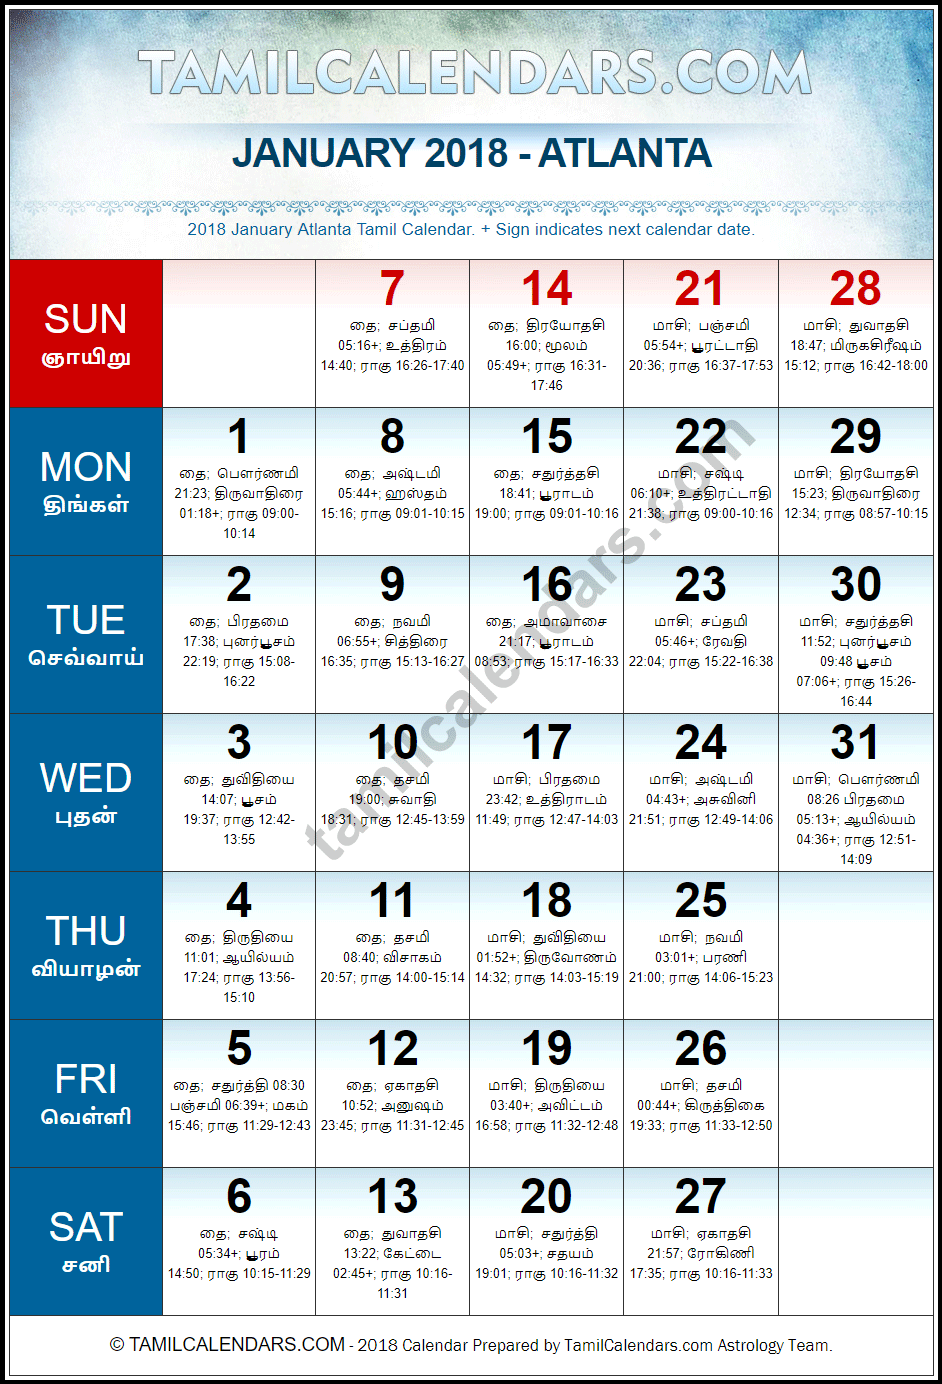 January 2018 Tamil Calendar for Atlanta, USA